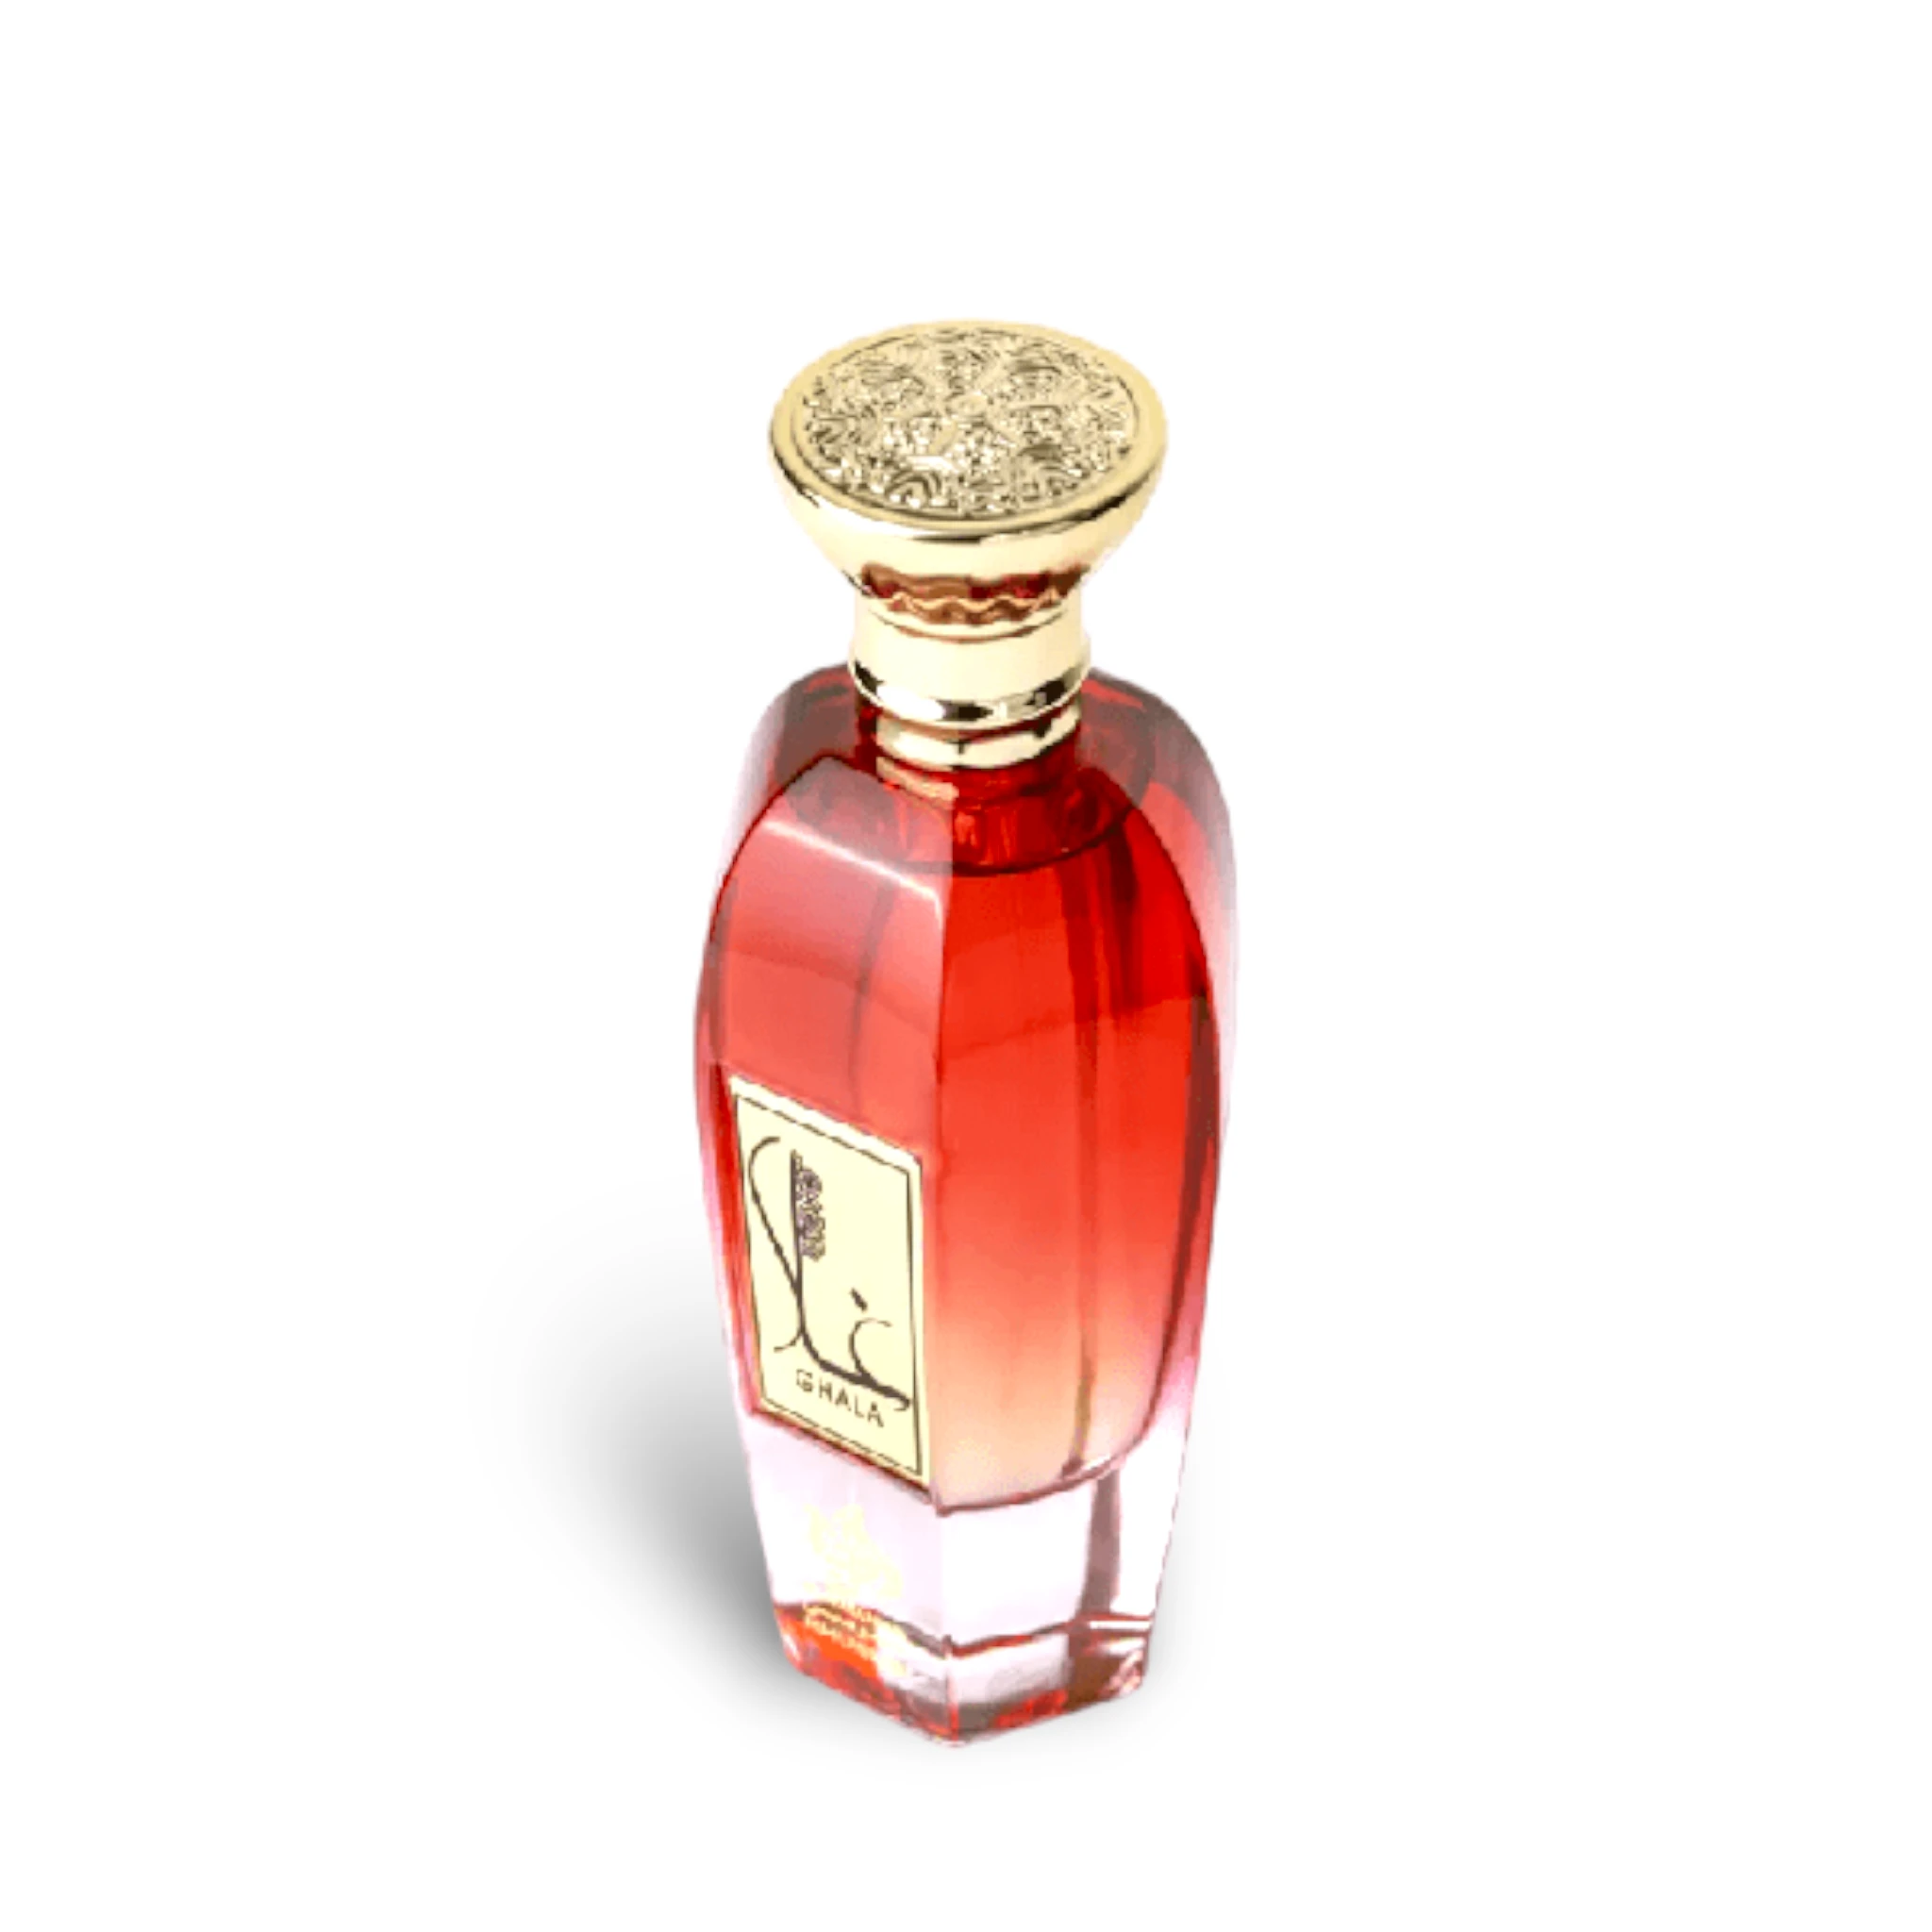 Ghala Perfume Eau De Parfum 100Ml By Al Wataniah